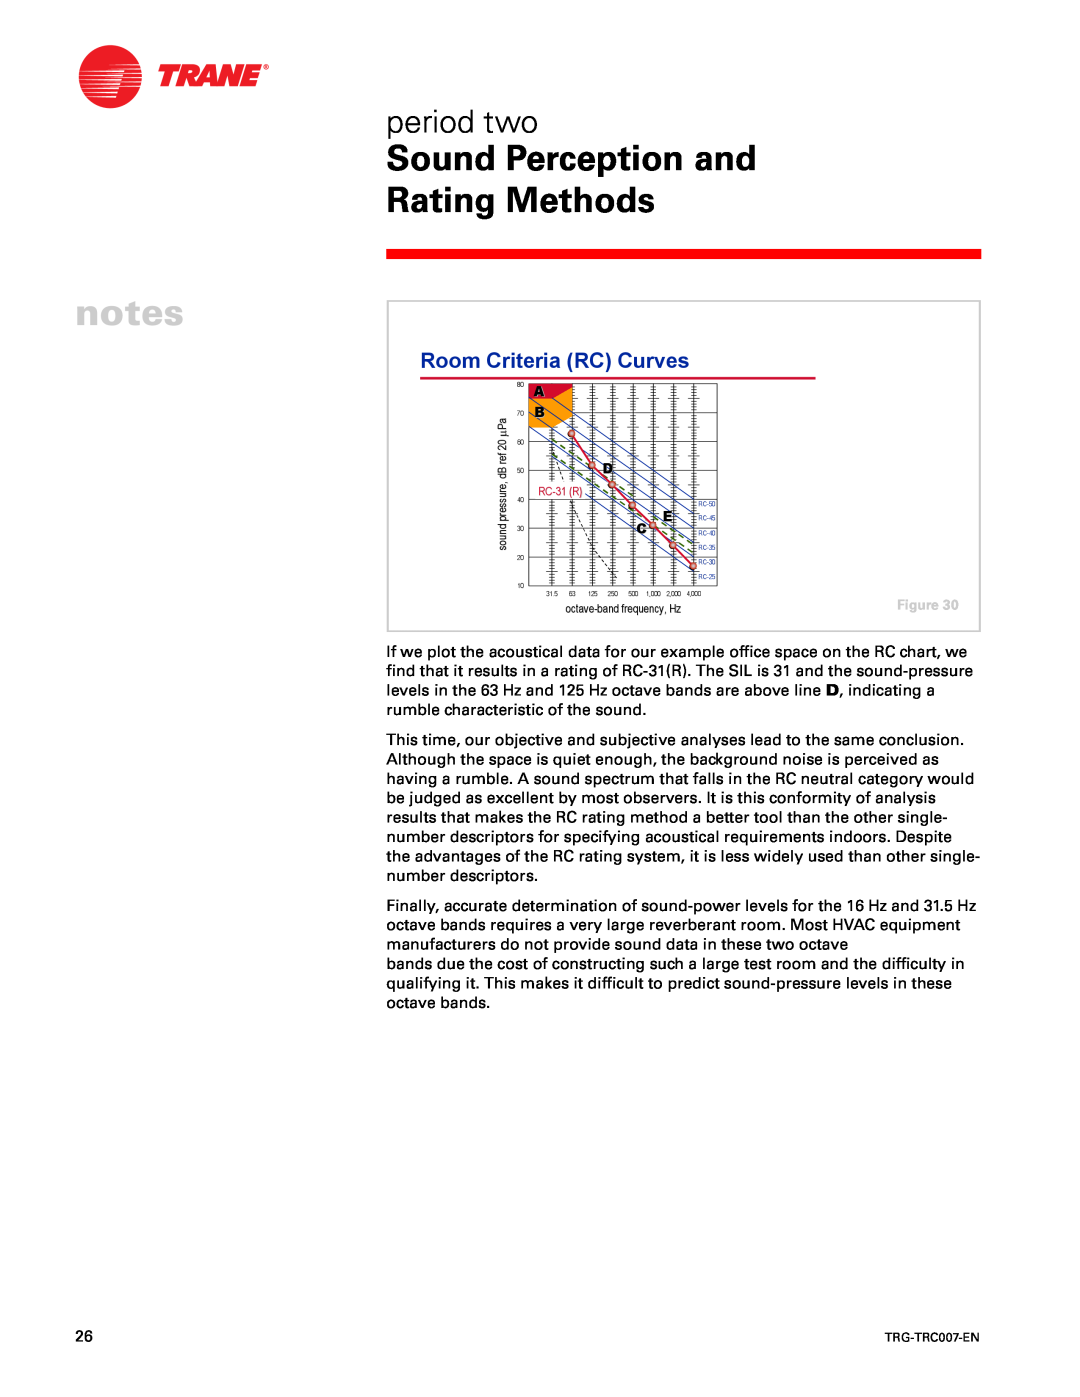 Trane TRG-TRC007-EN manual Sound Perception and Rating Methods, period two, Room Criteria RC Curves, RC-31R 